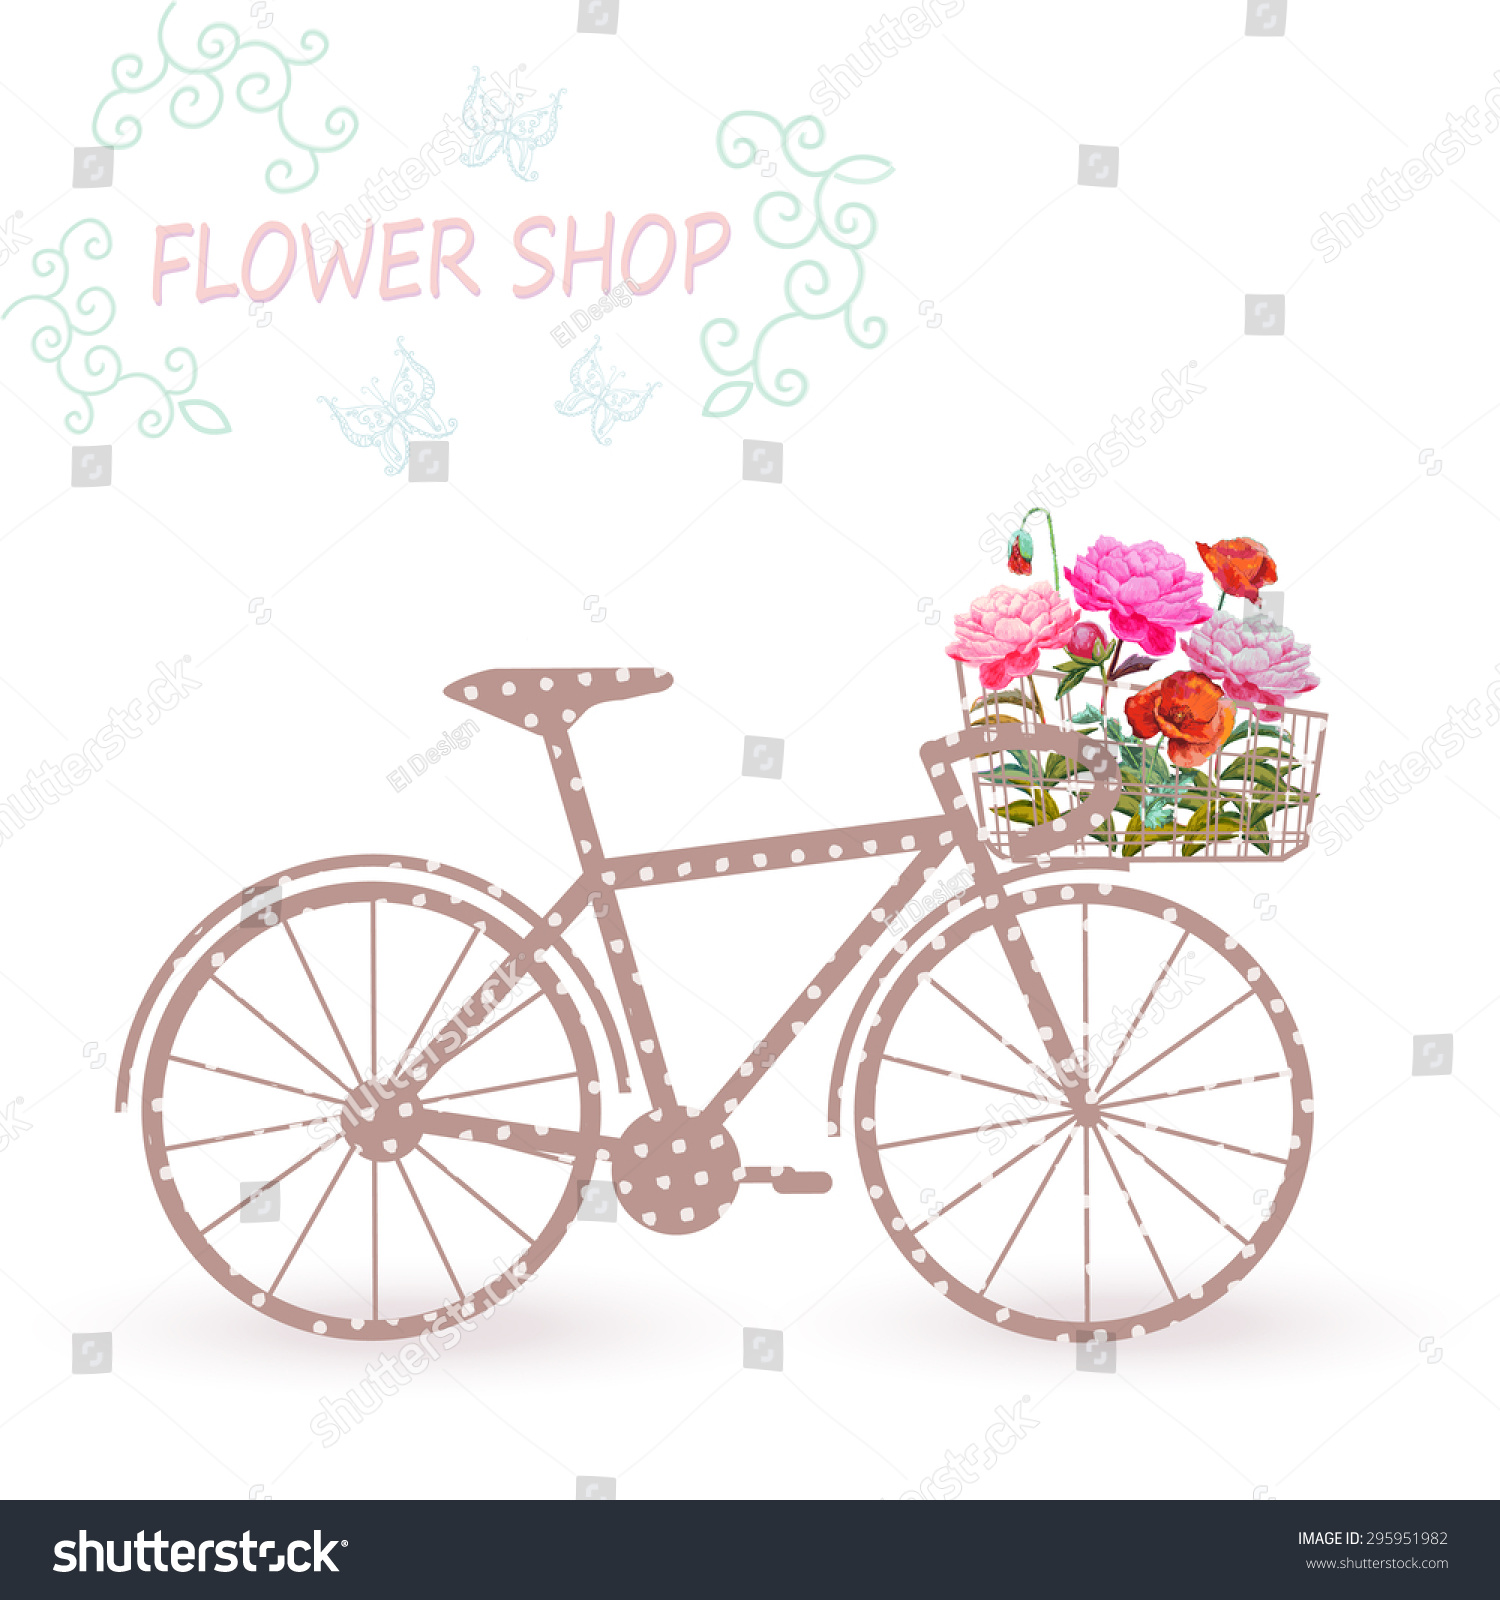 used bike basket